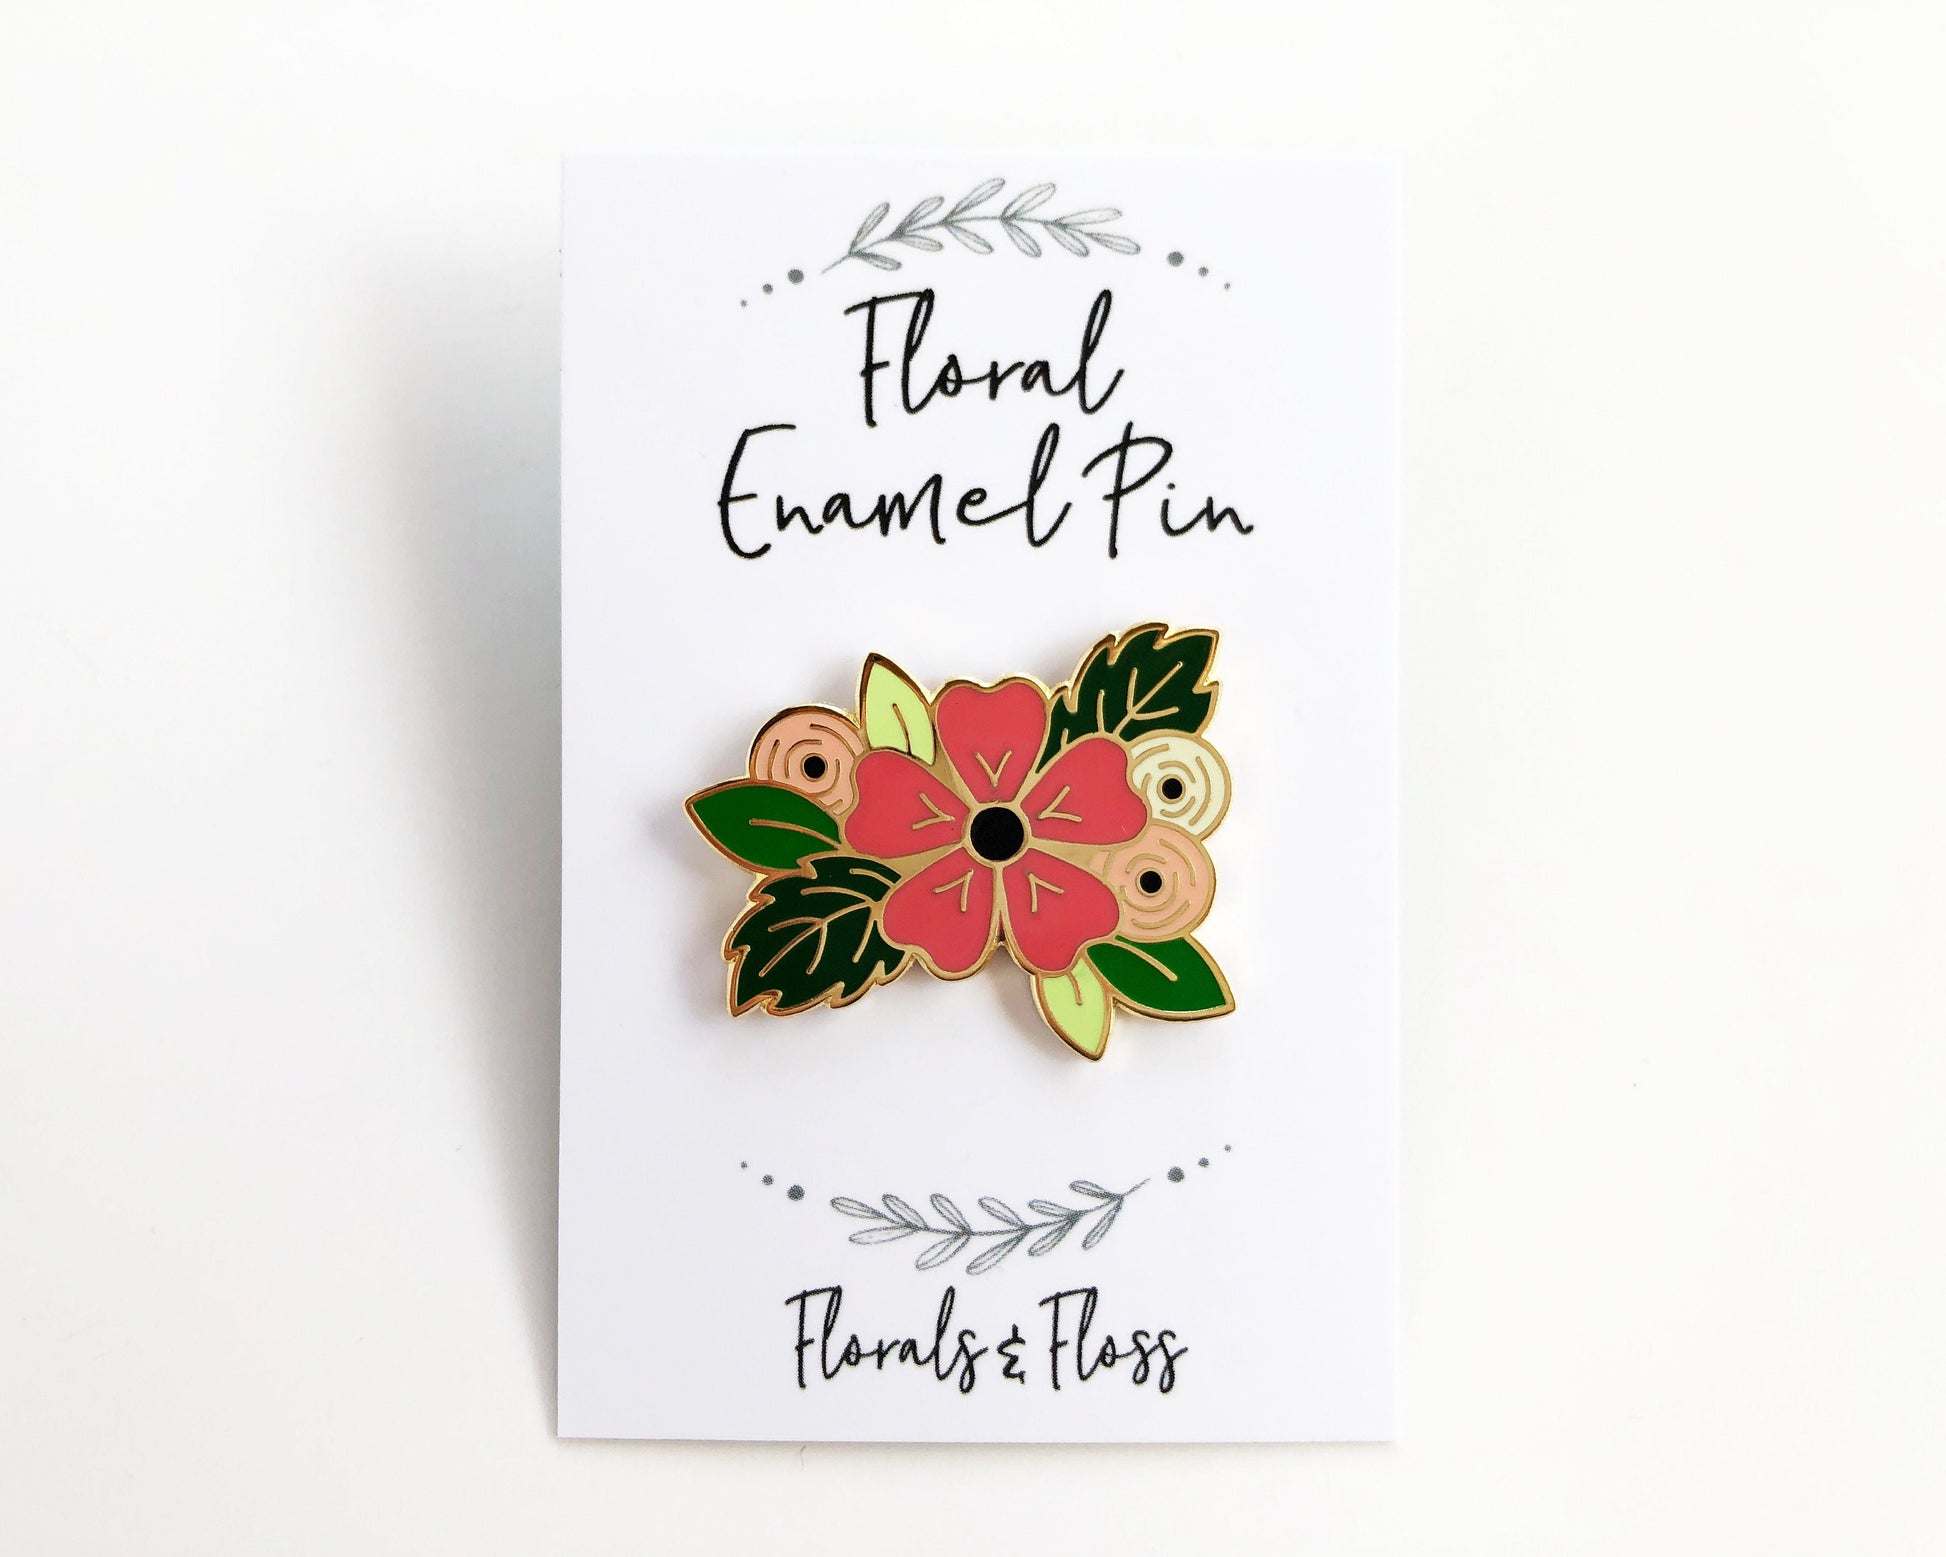 Floral enamel pin, Enamel pin, lapel pin, flower pin, floral clothing accessory